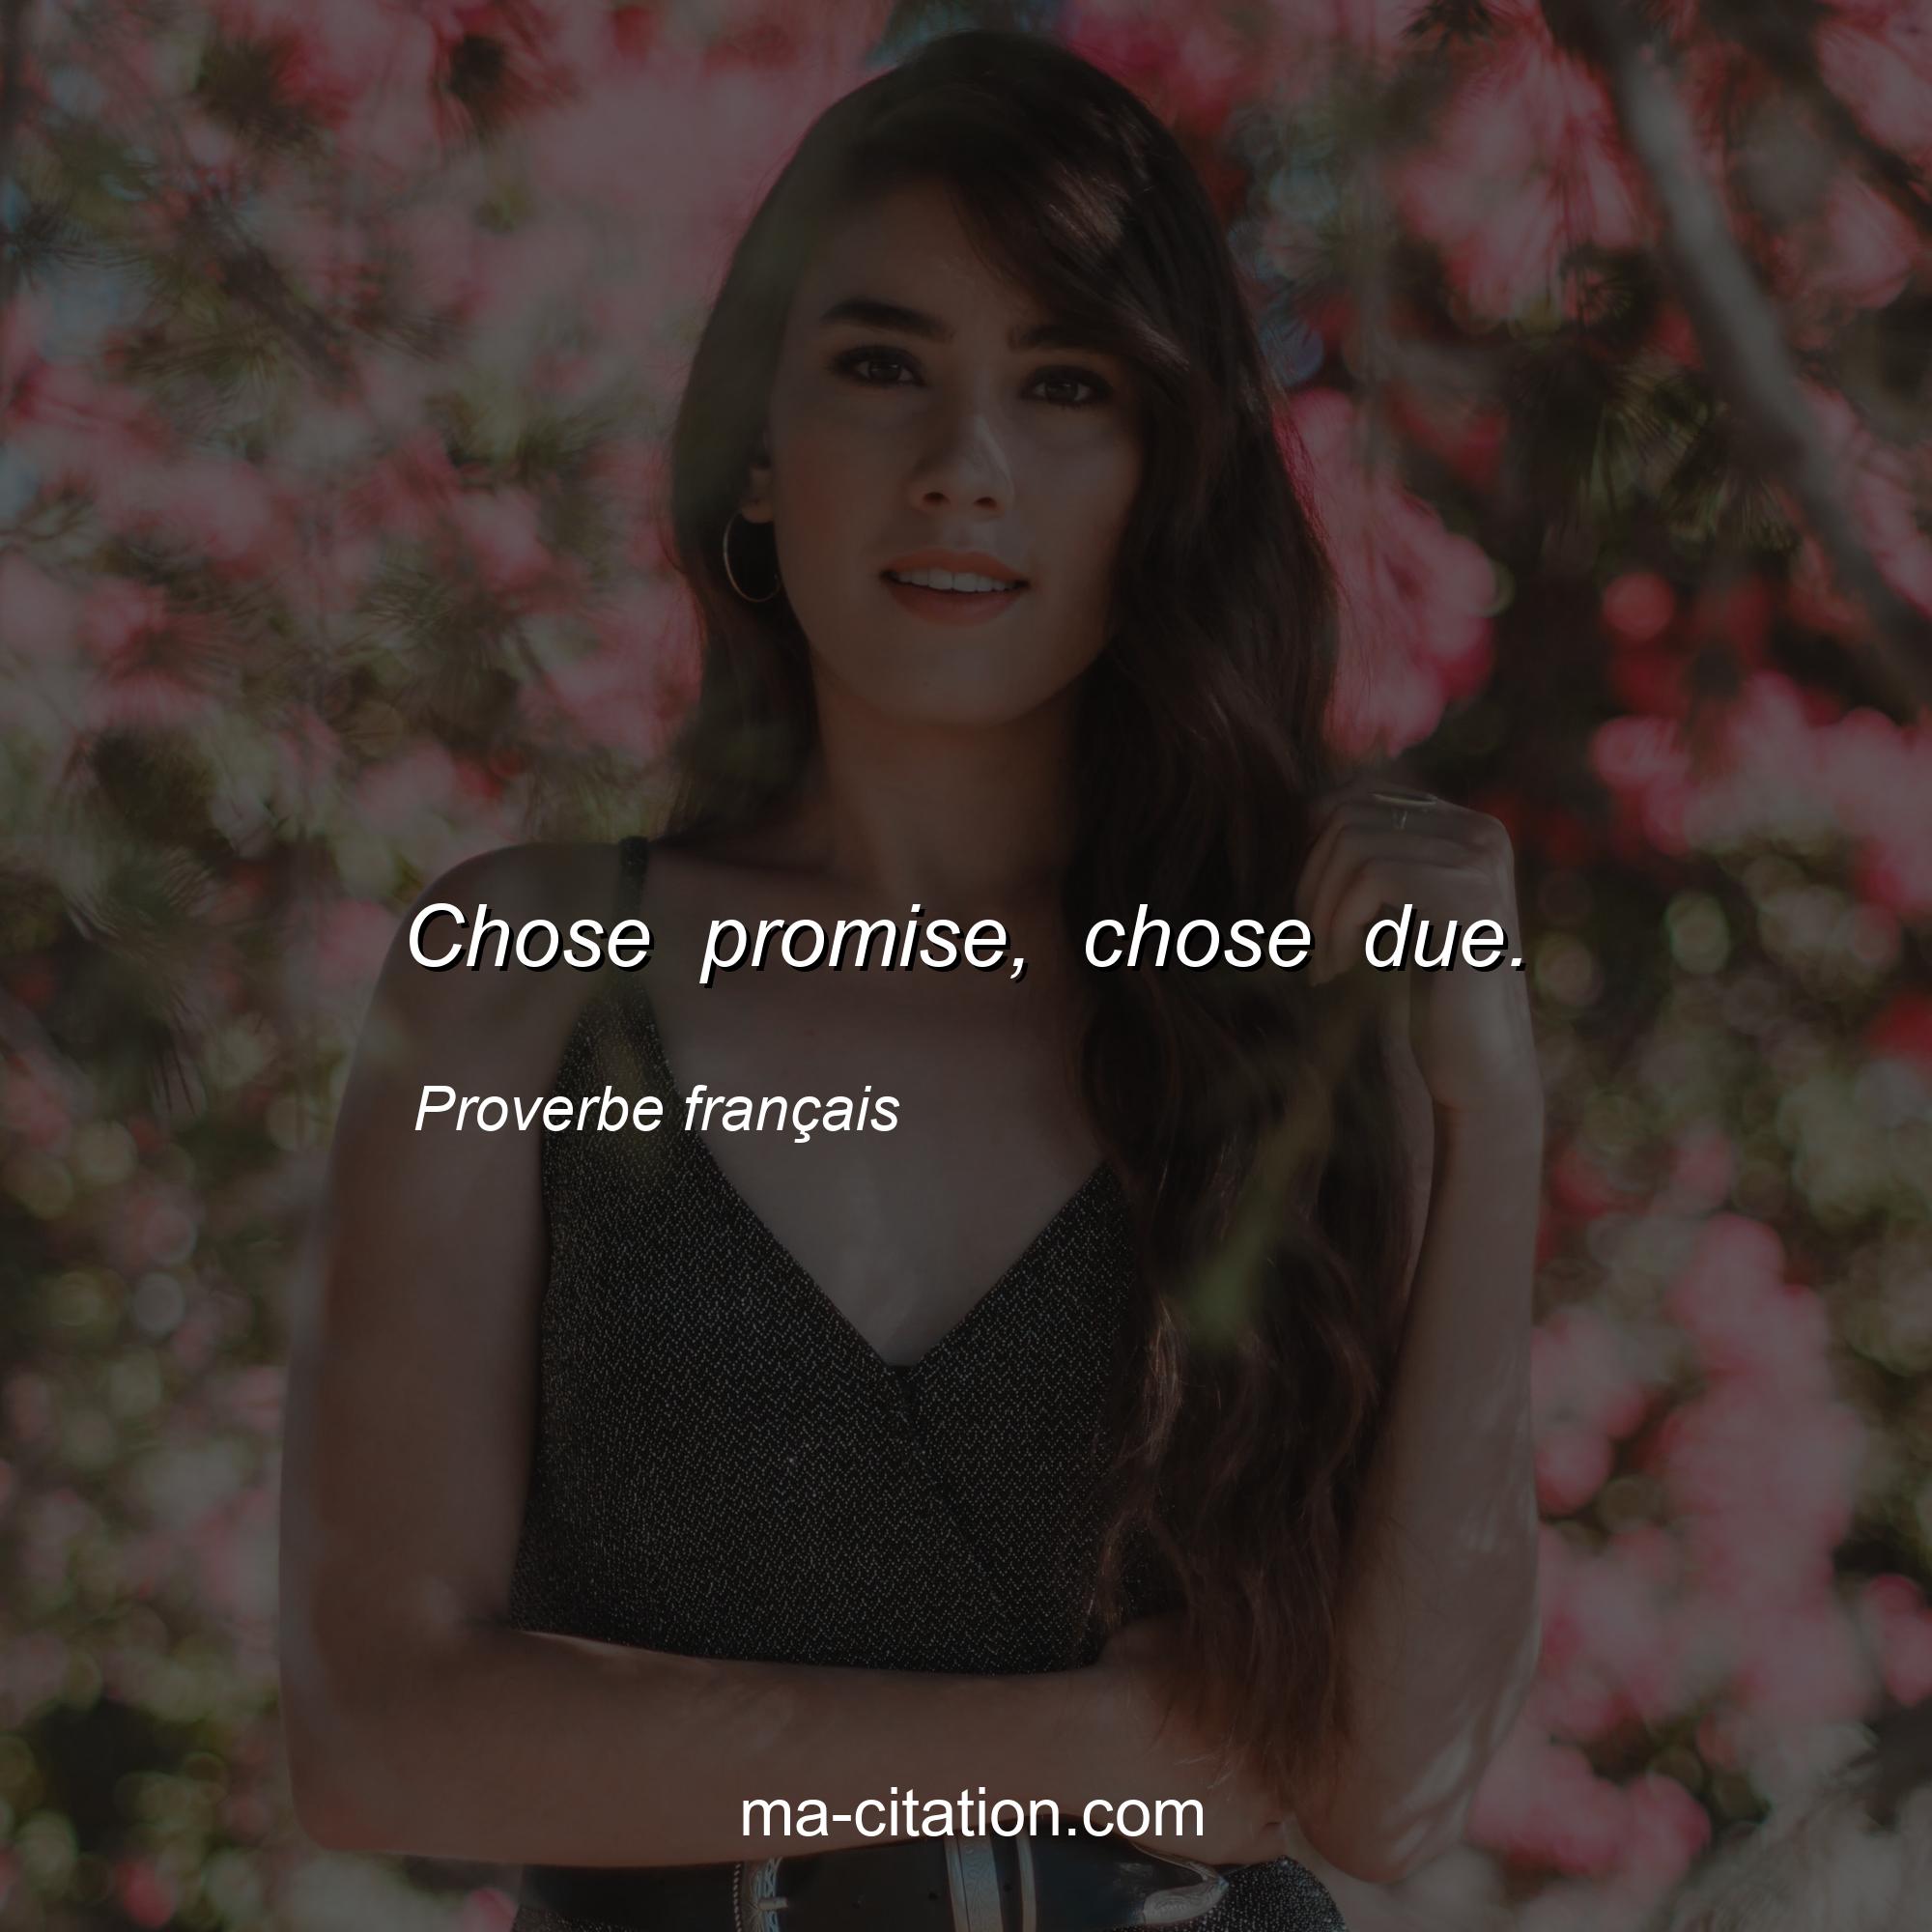 Proverbe français : Chose promise, chose due.